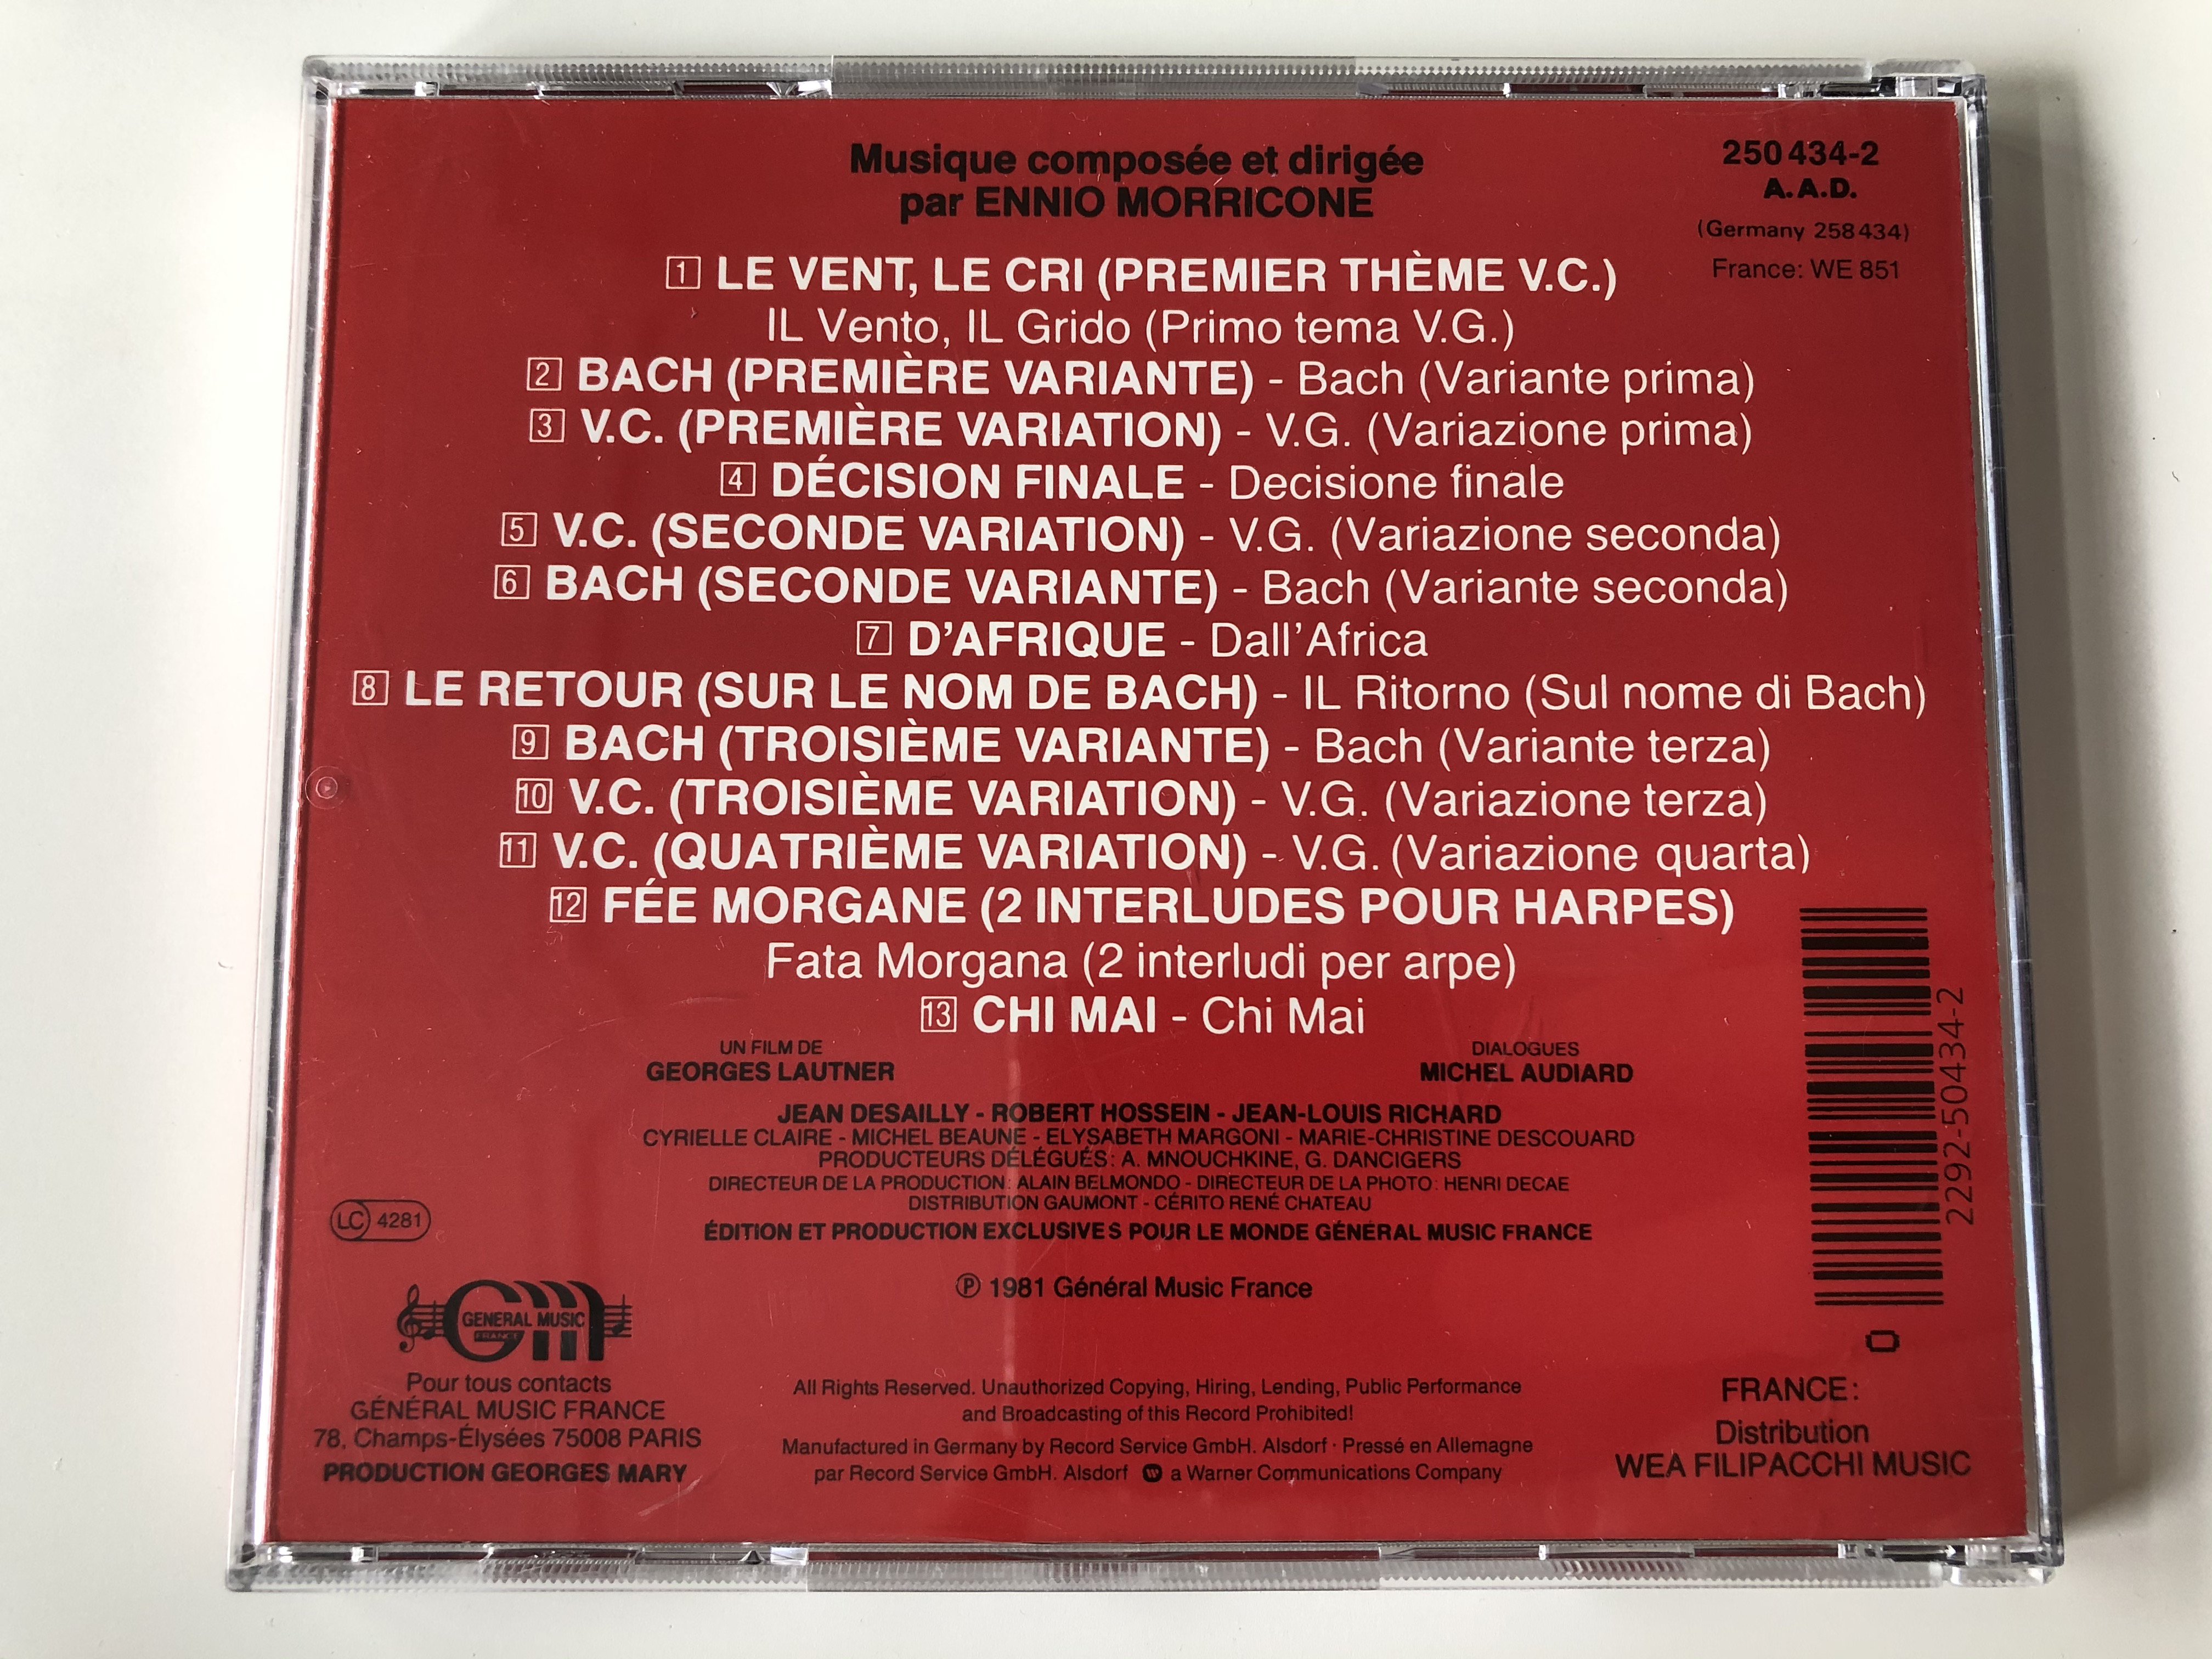 Musique de Ennio Morricone ‎(Bande Originale Du Film) / Jean-Paul